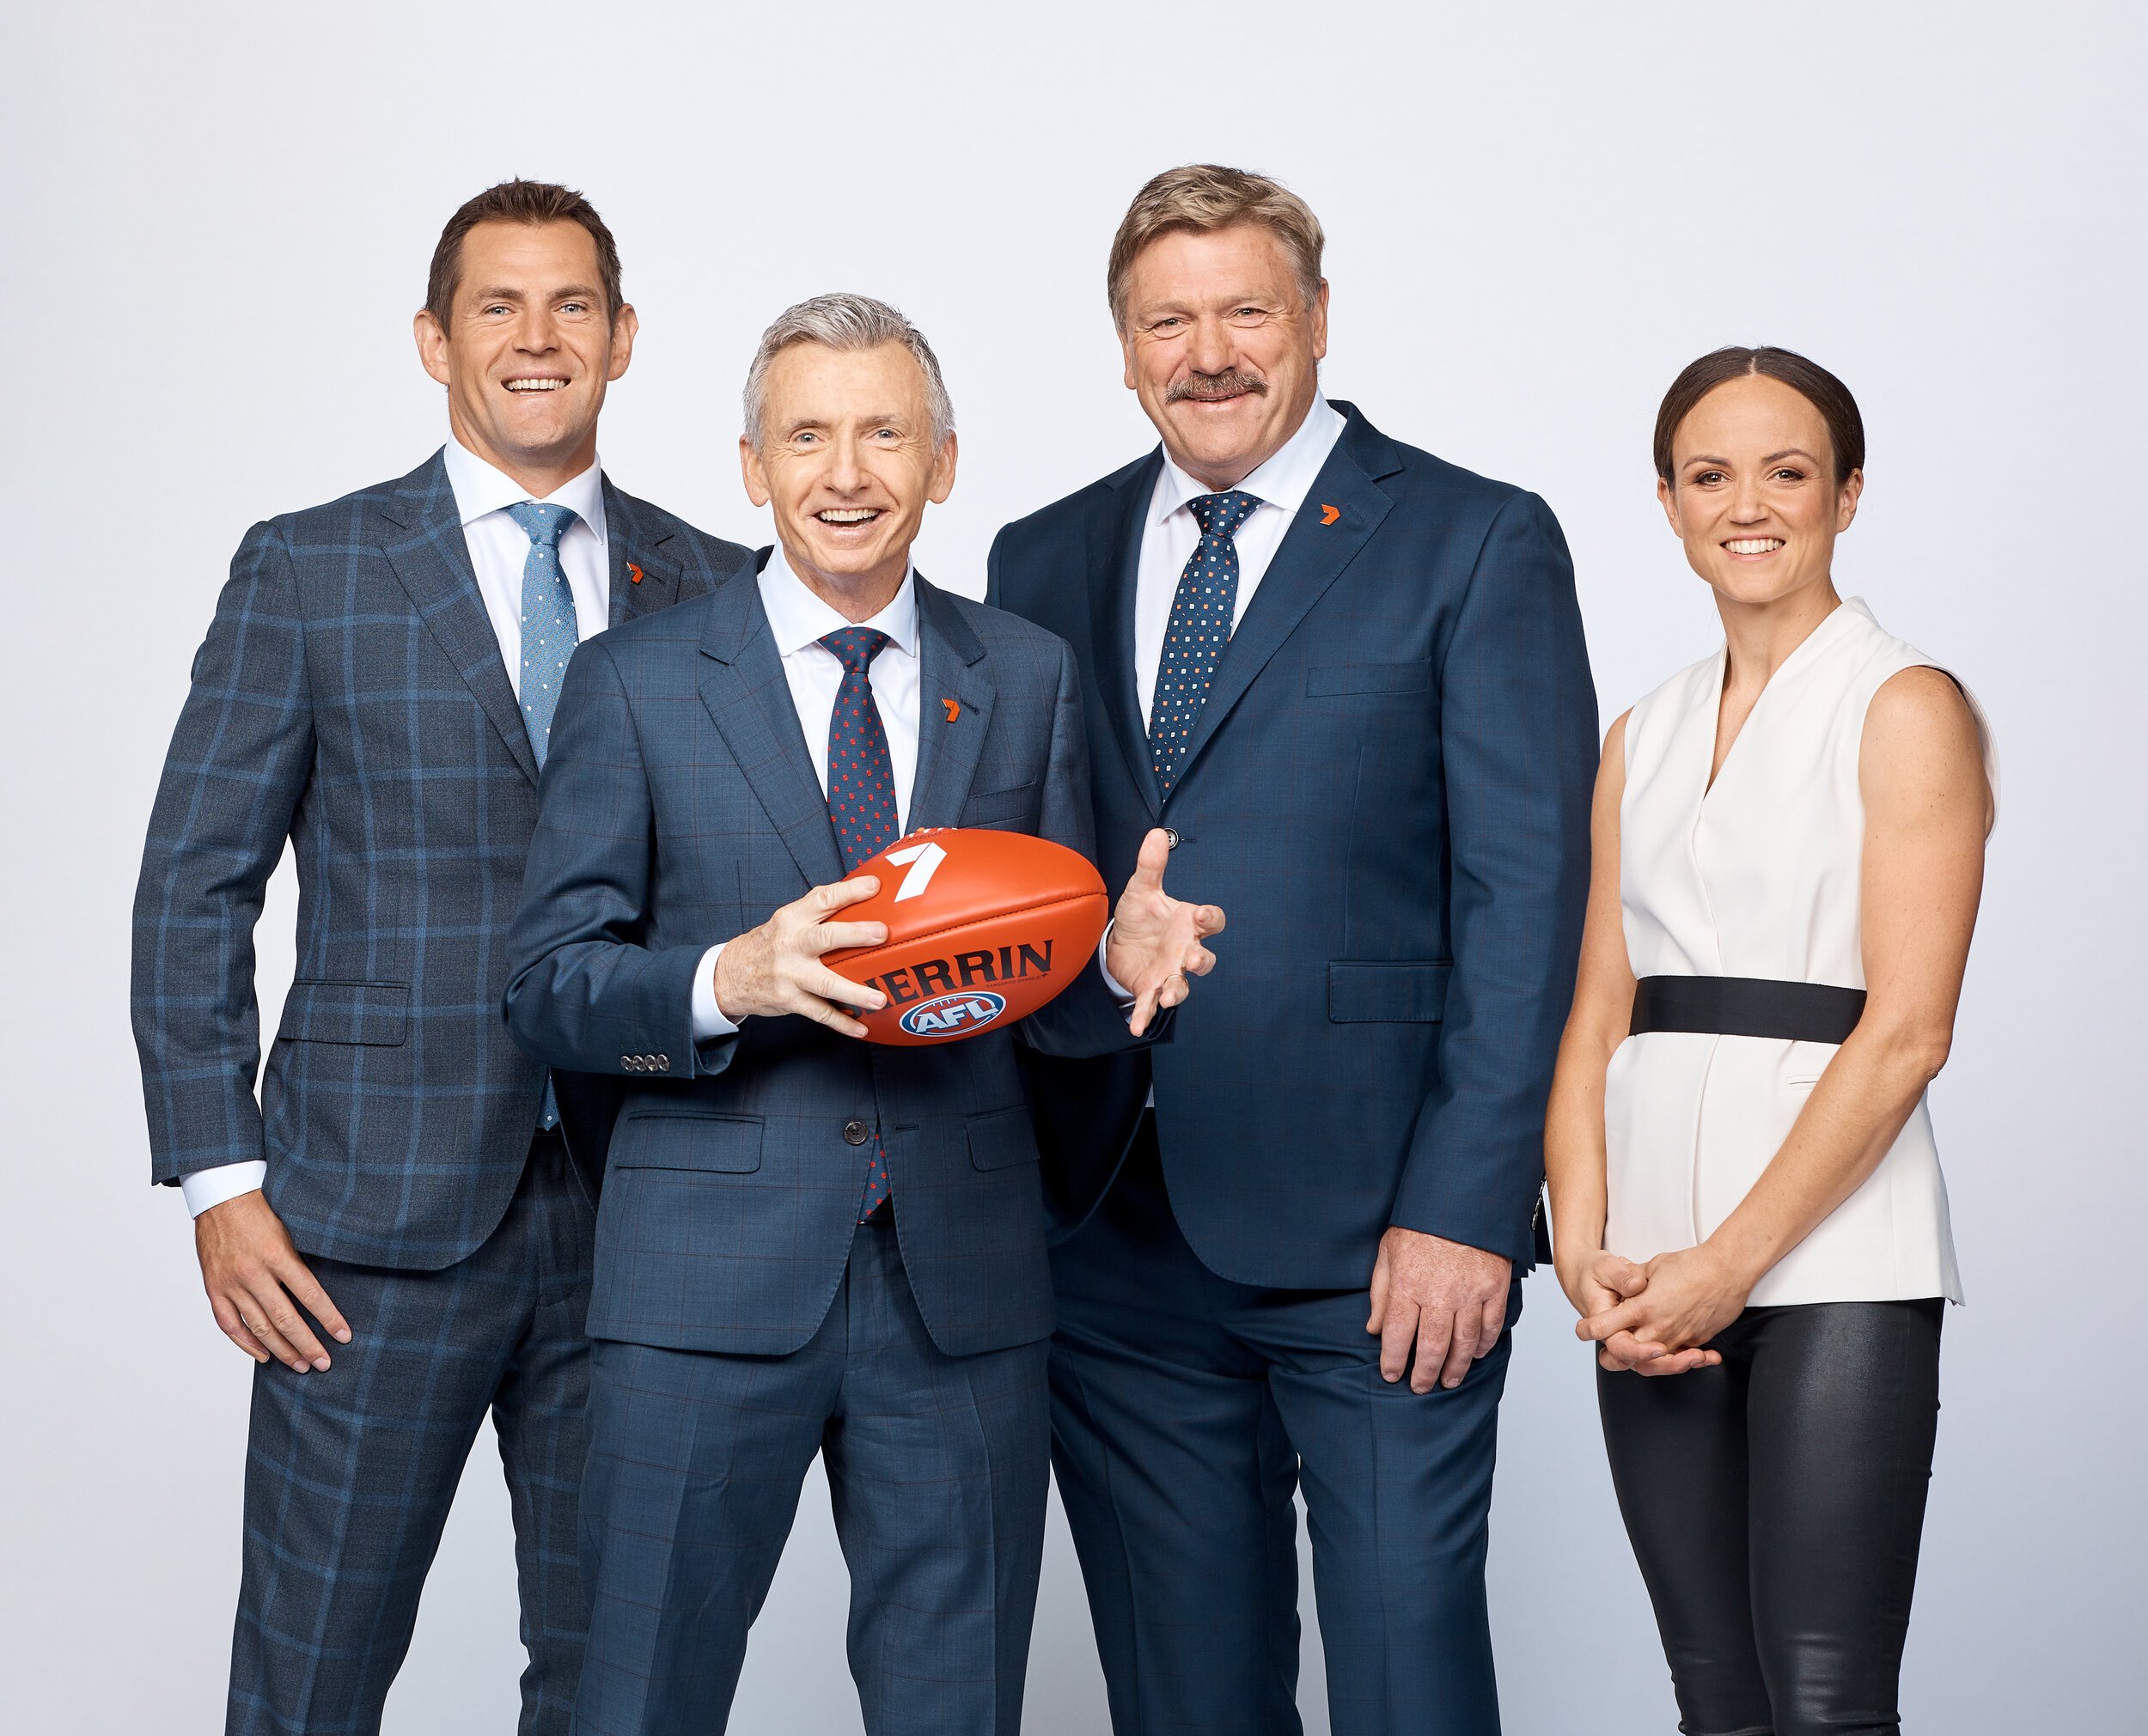   Seven’s AFL Team  Source: Seven Network 